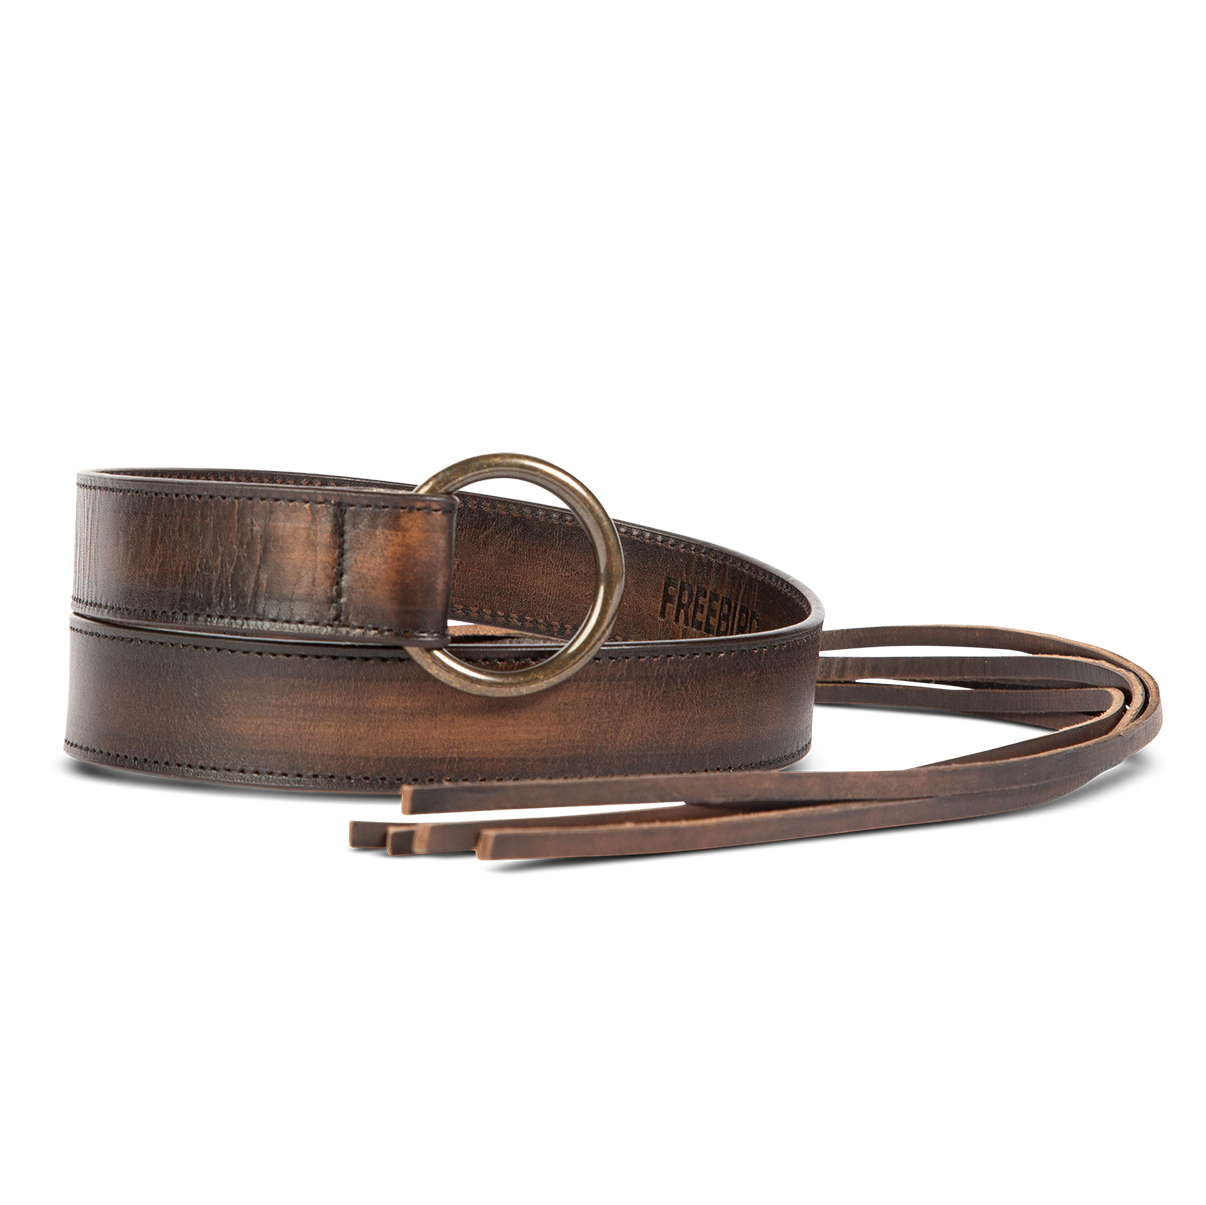 FREEBIRD Tassel black distressed full grain leather belt featuring rustic loop and tassel detailing